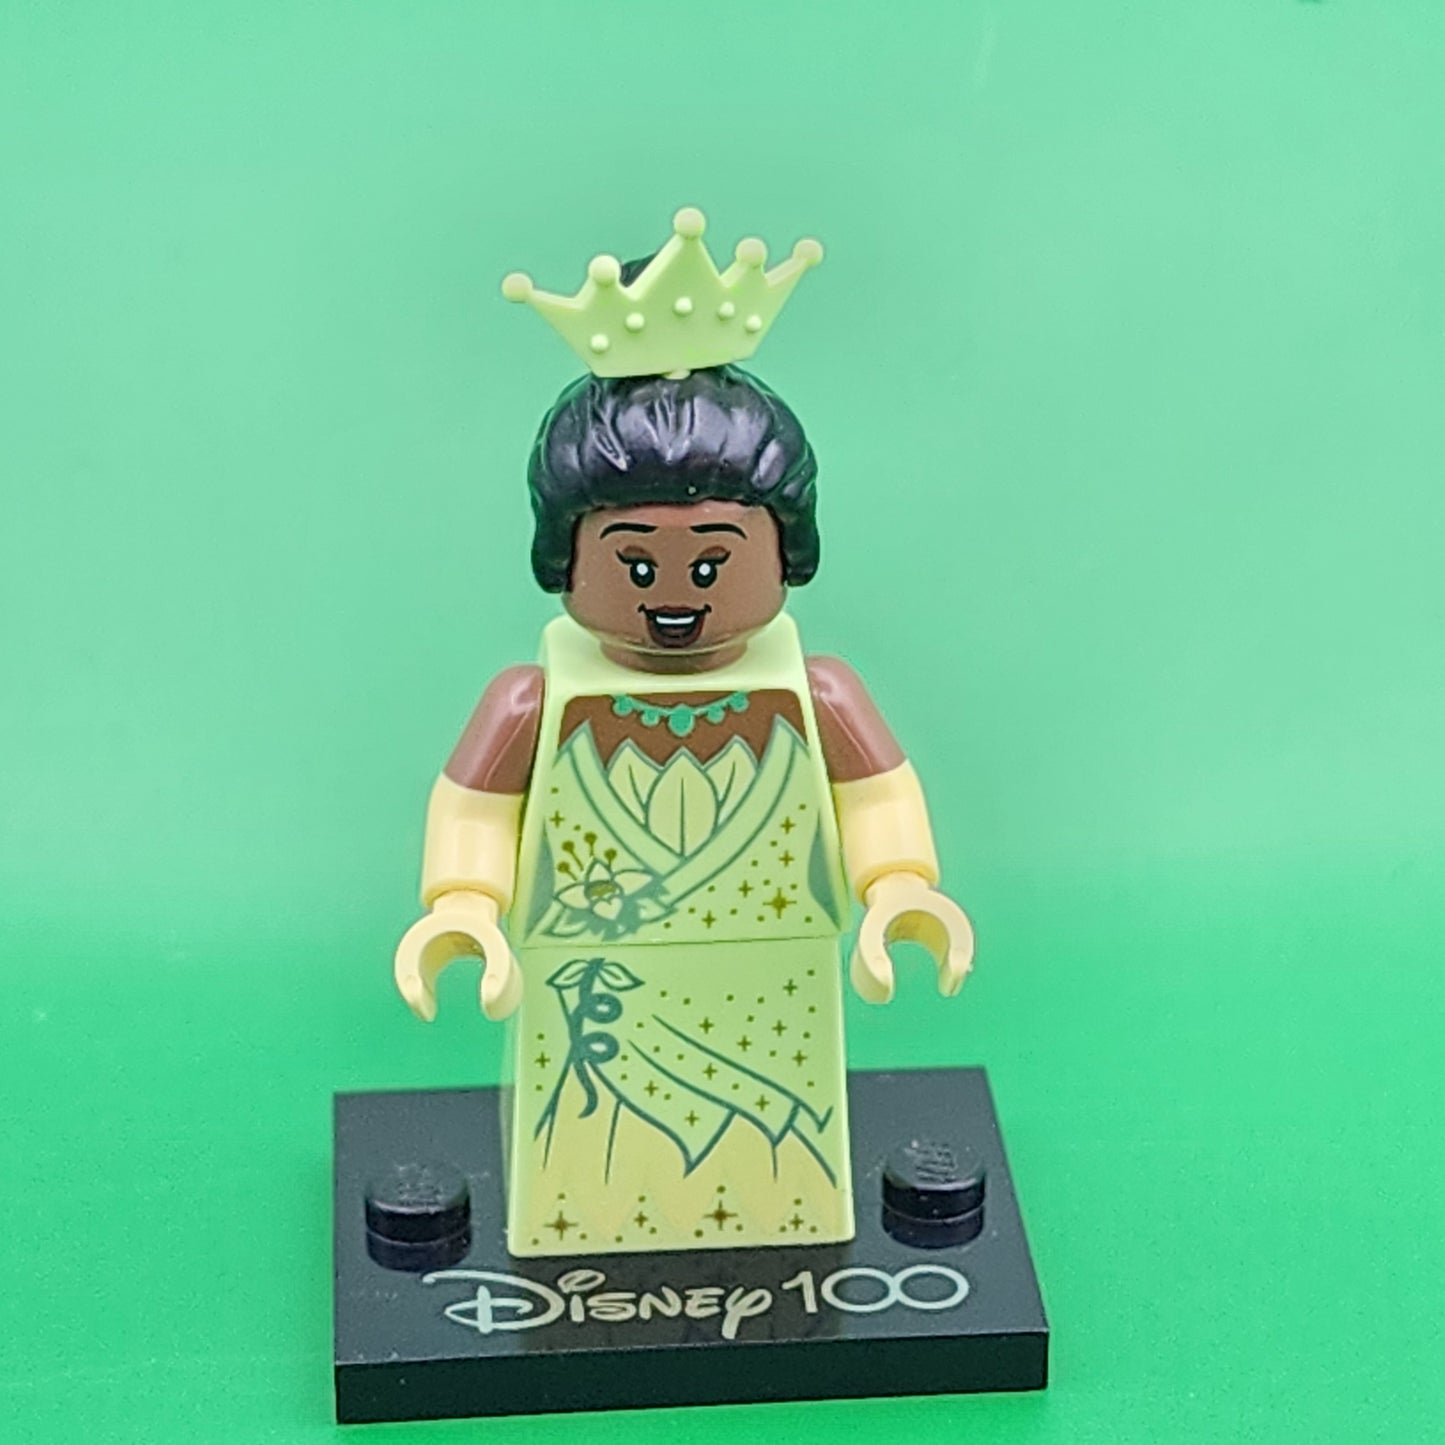 Lego Princess Tiana Minifigure Disney 100 dis096